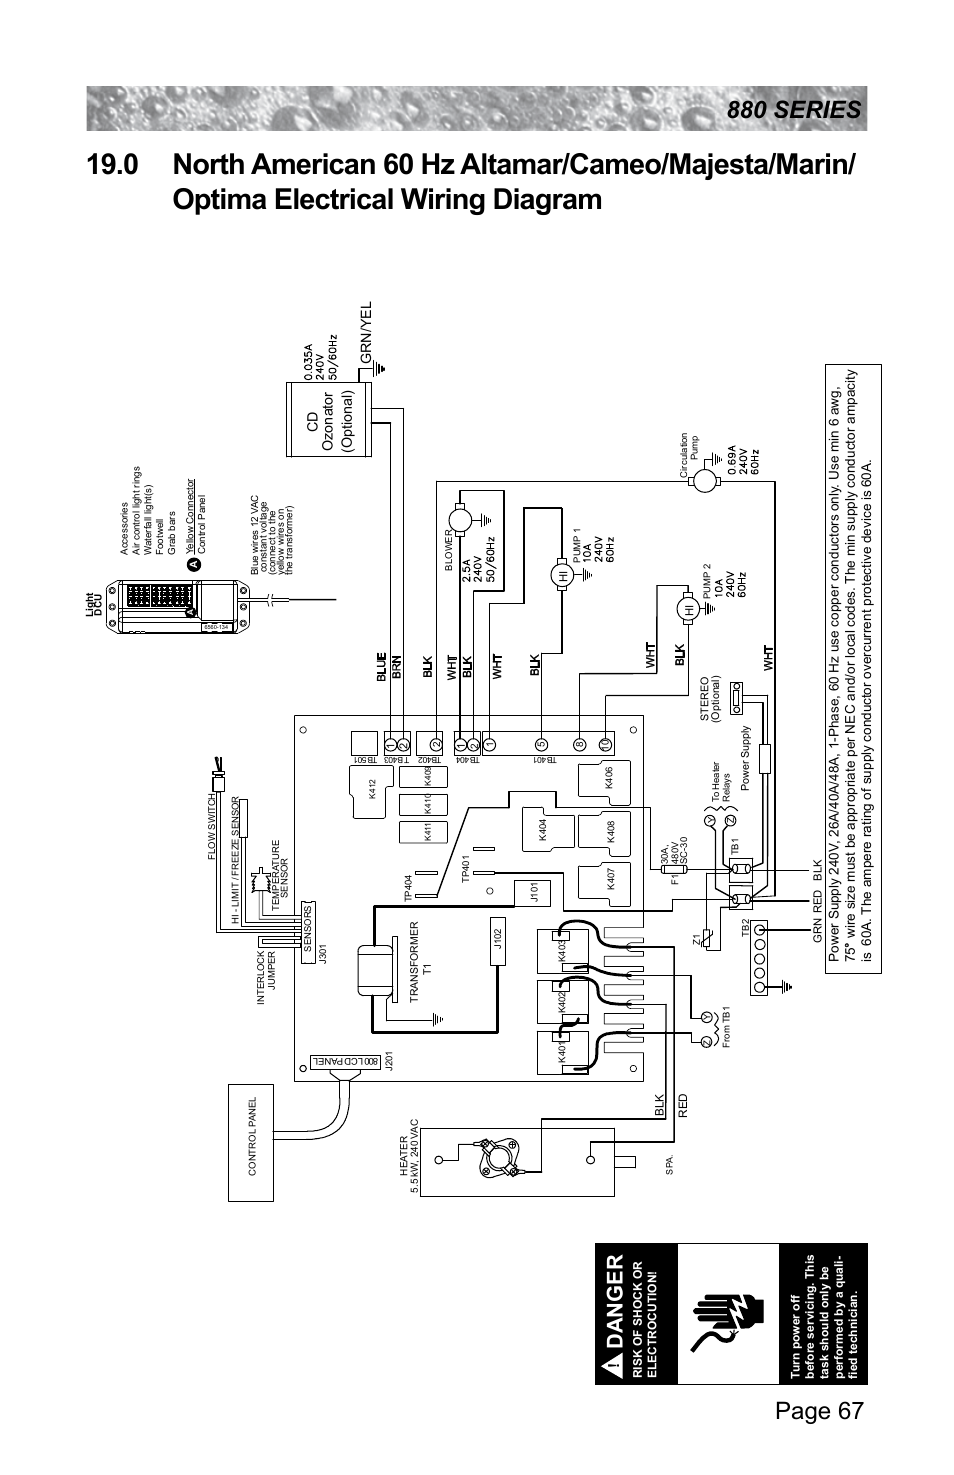 solana tx spa wiring diagram